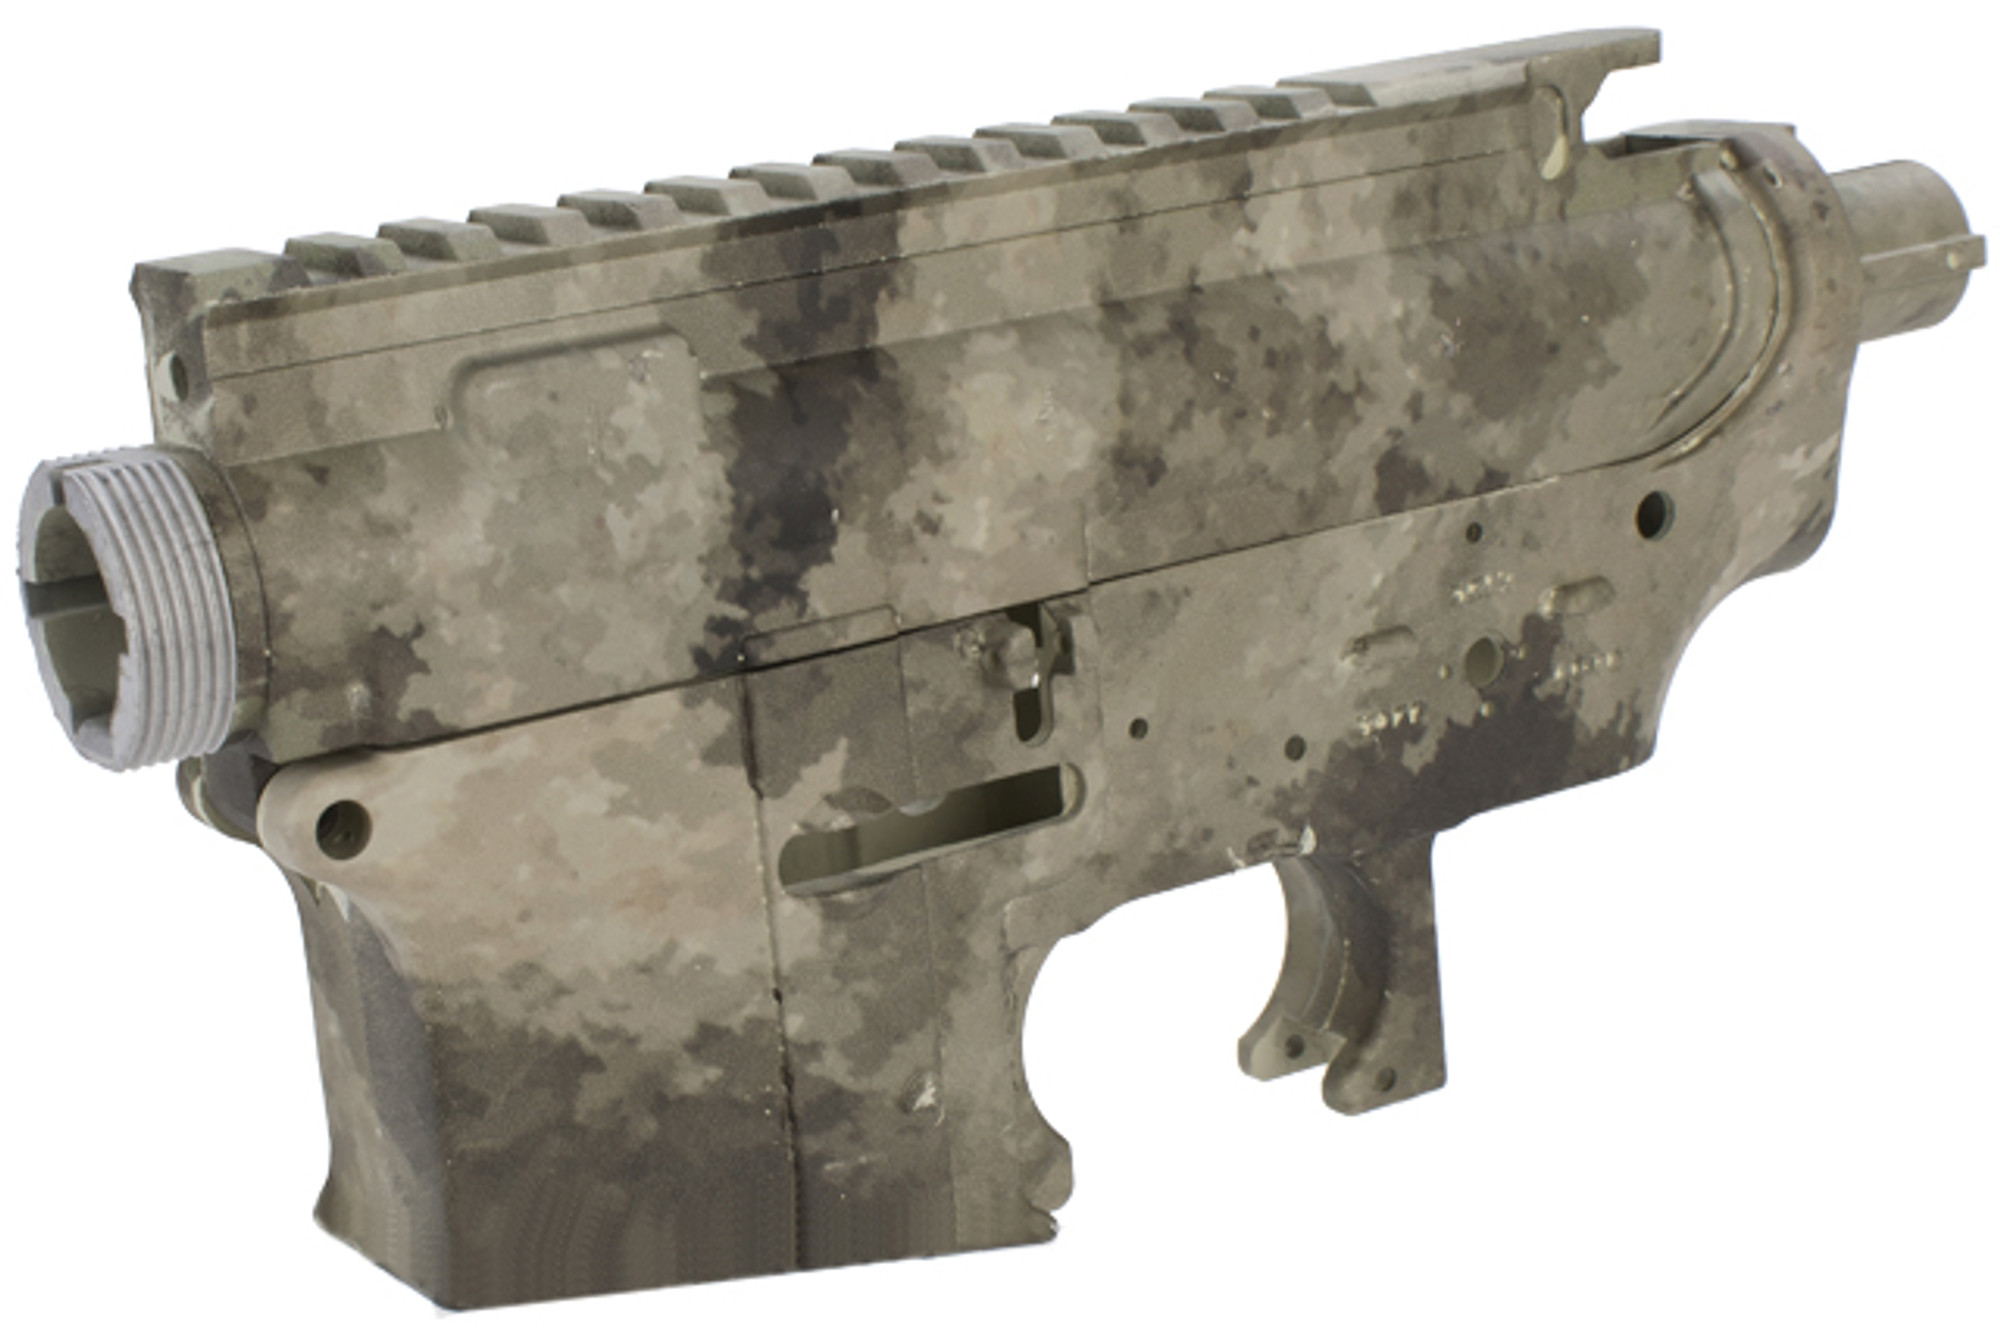 Full Metal Body Kit for M4  M16 Airsoft AEG Rifles - Arid Camo